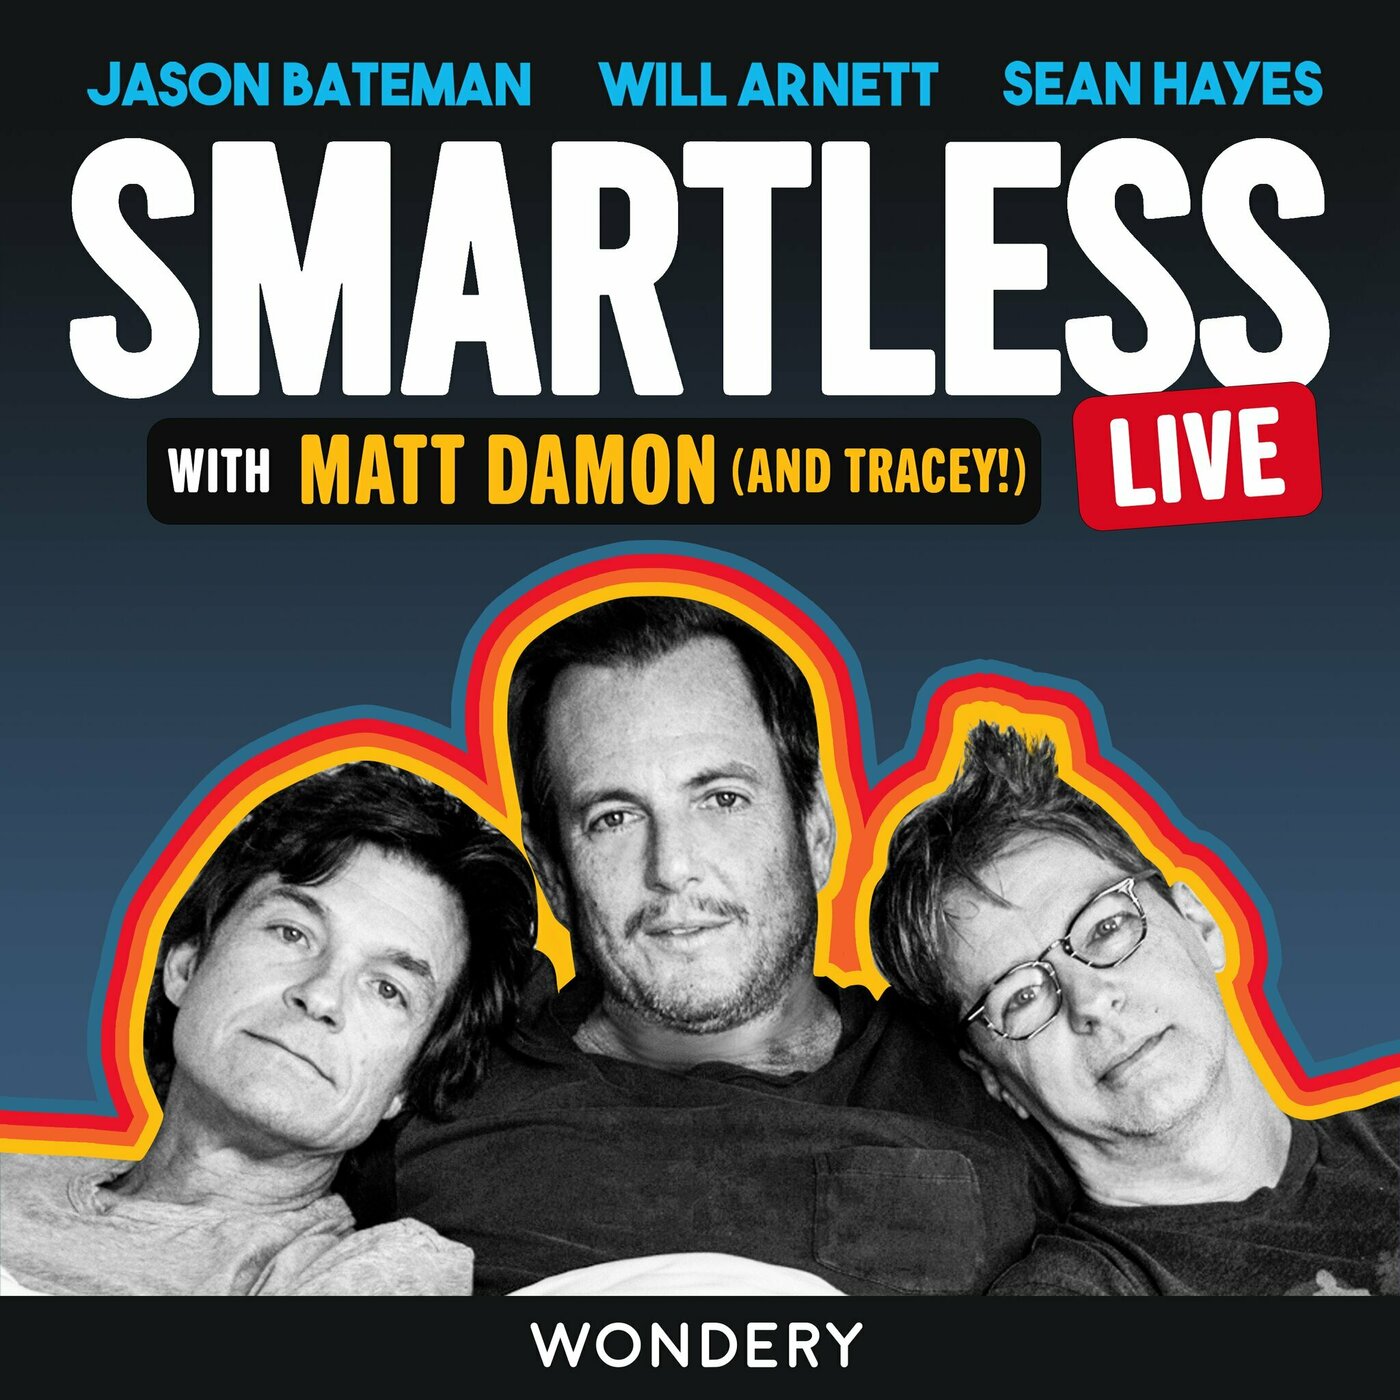 “Matt Damon (and Tracey!) LIVE in Madison”